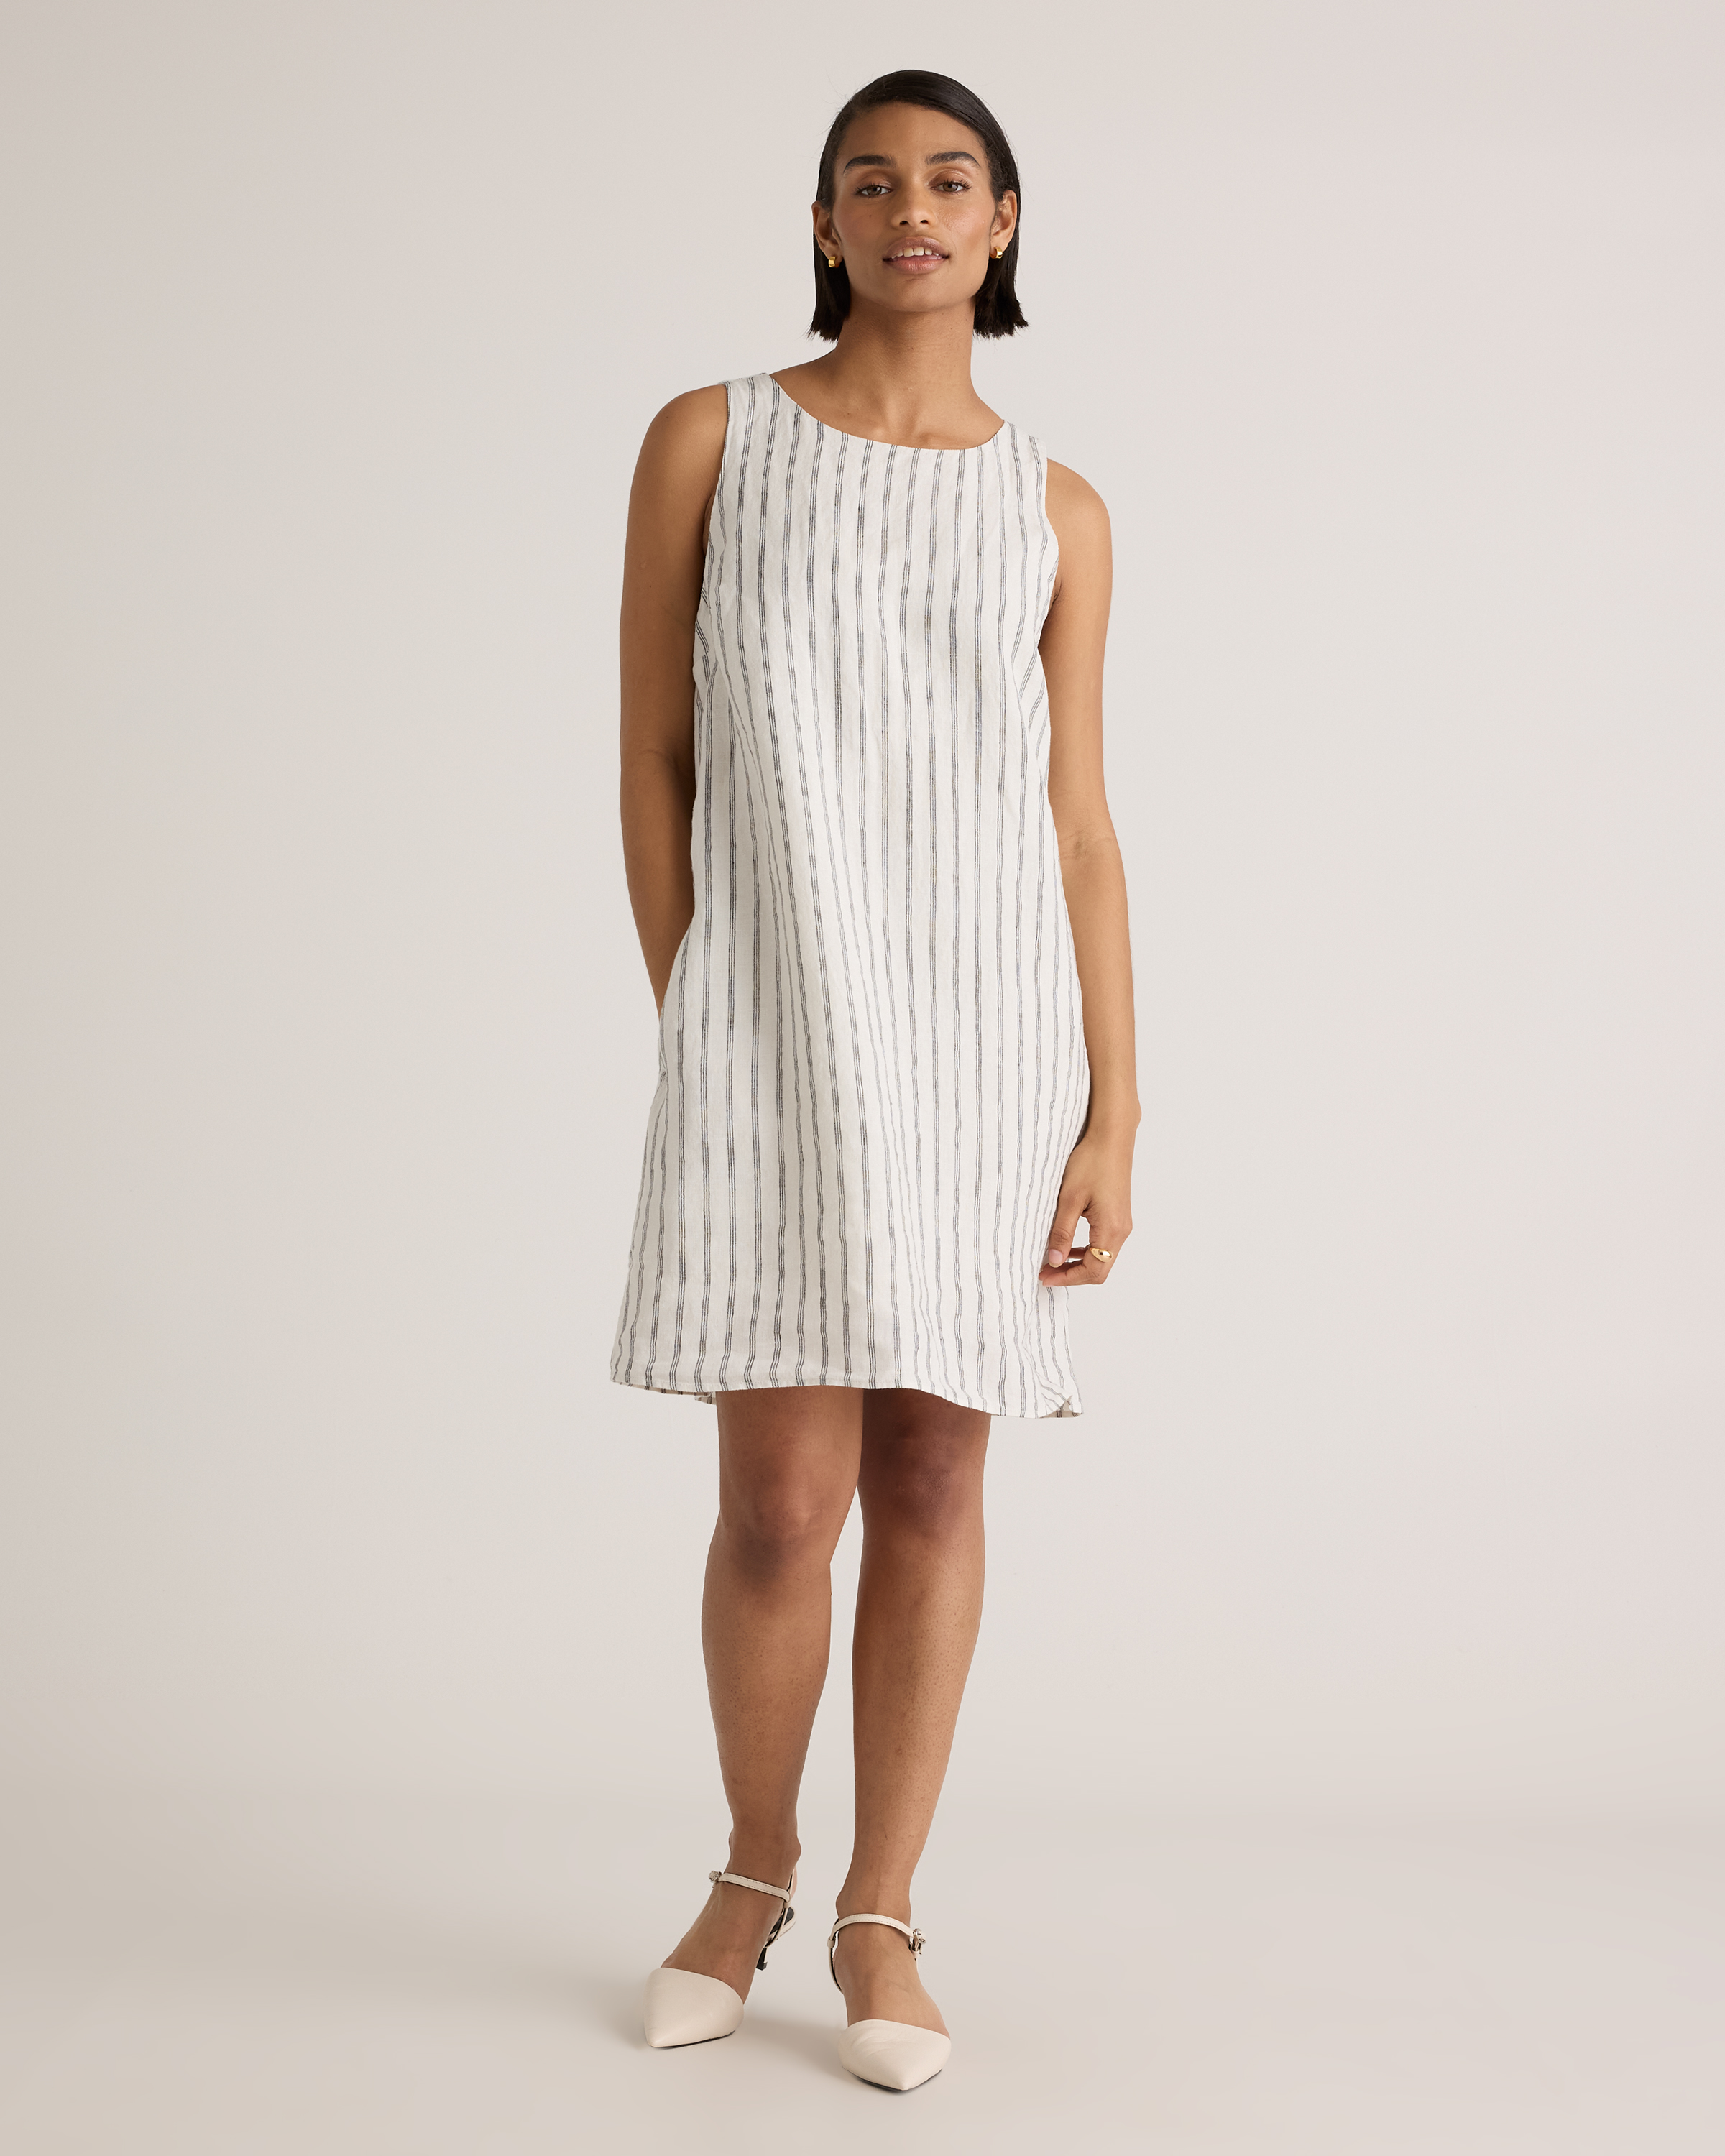 Quince Women's 100% European Linen Tank Top Mini Dress In White